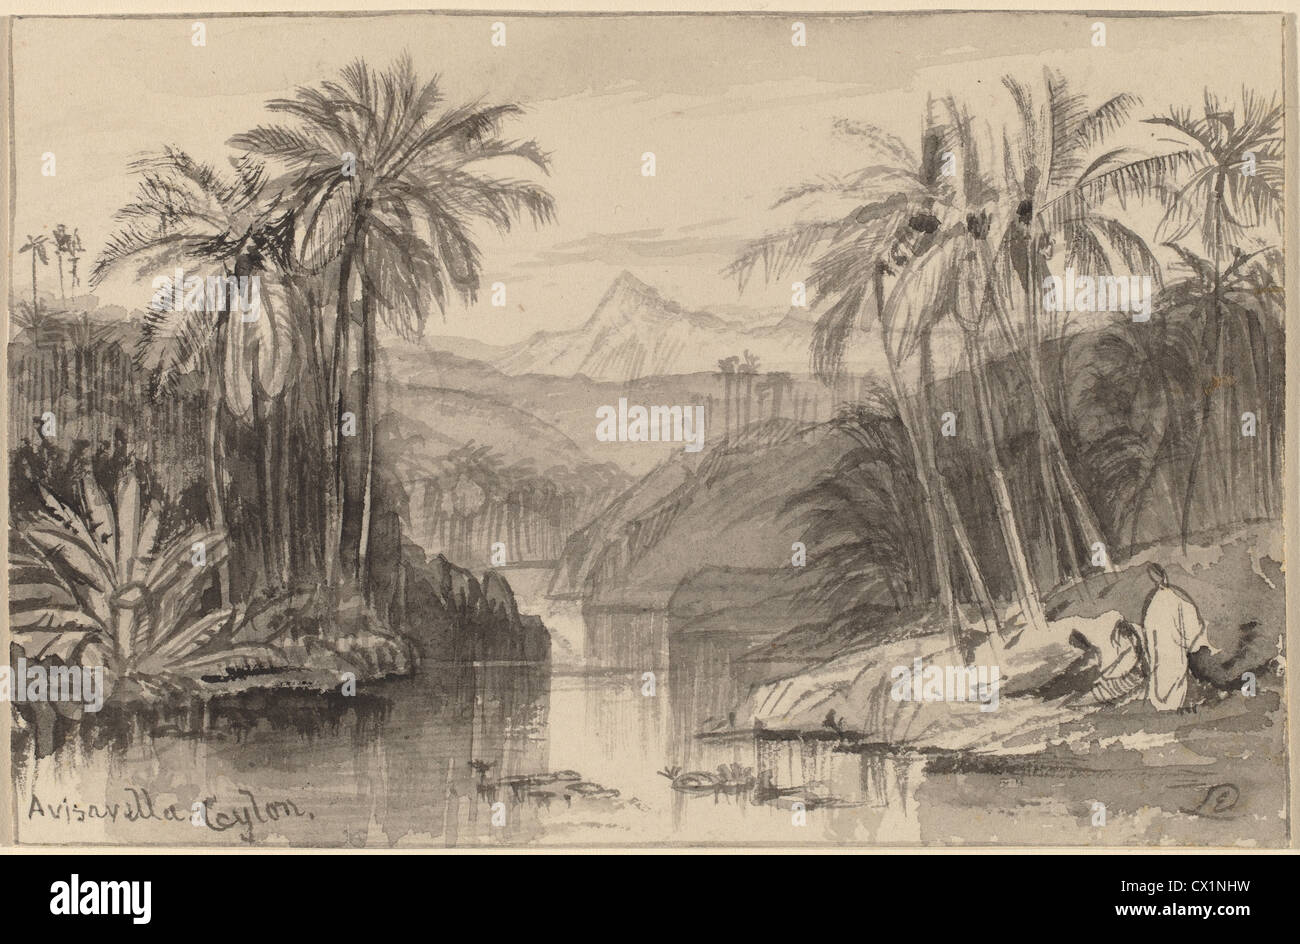 Edward Lear, Avisavella, Ceylon, British, 1812 - 1888, 1884/1885, gray wash on wove paper, laid down on card Stock Photo